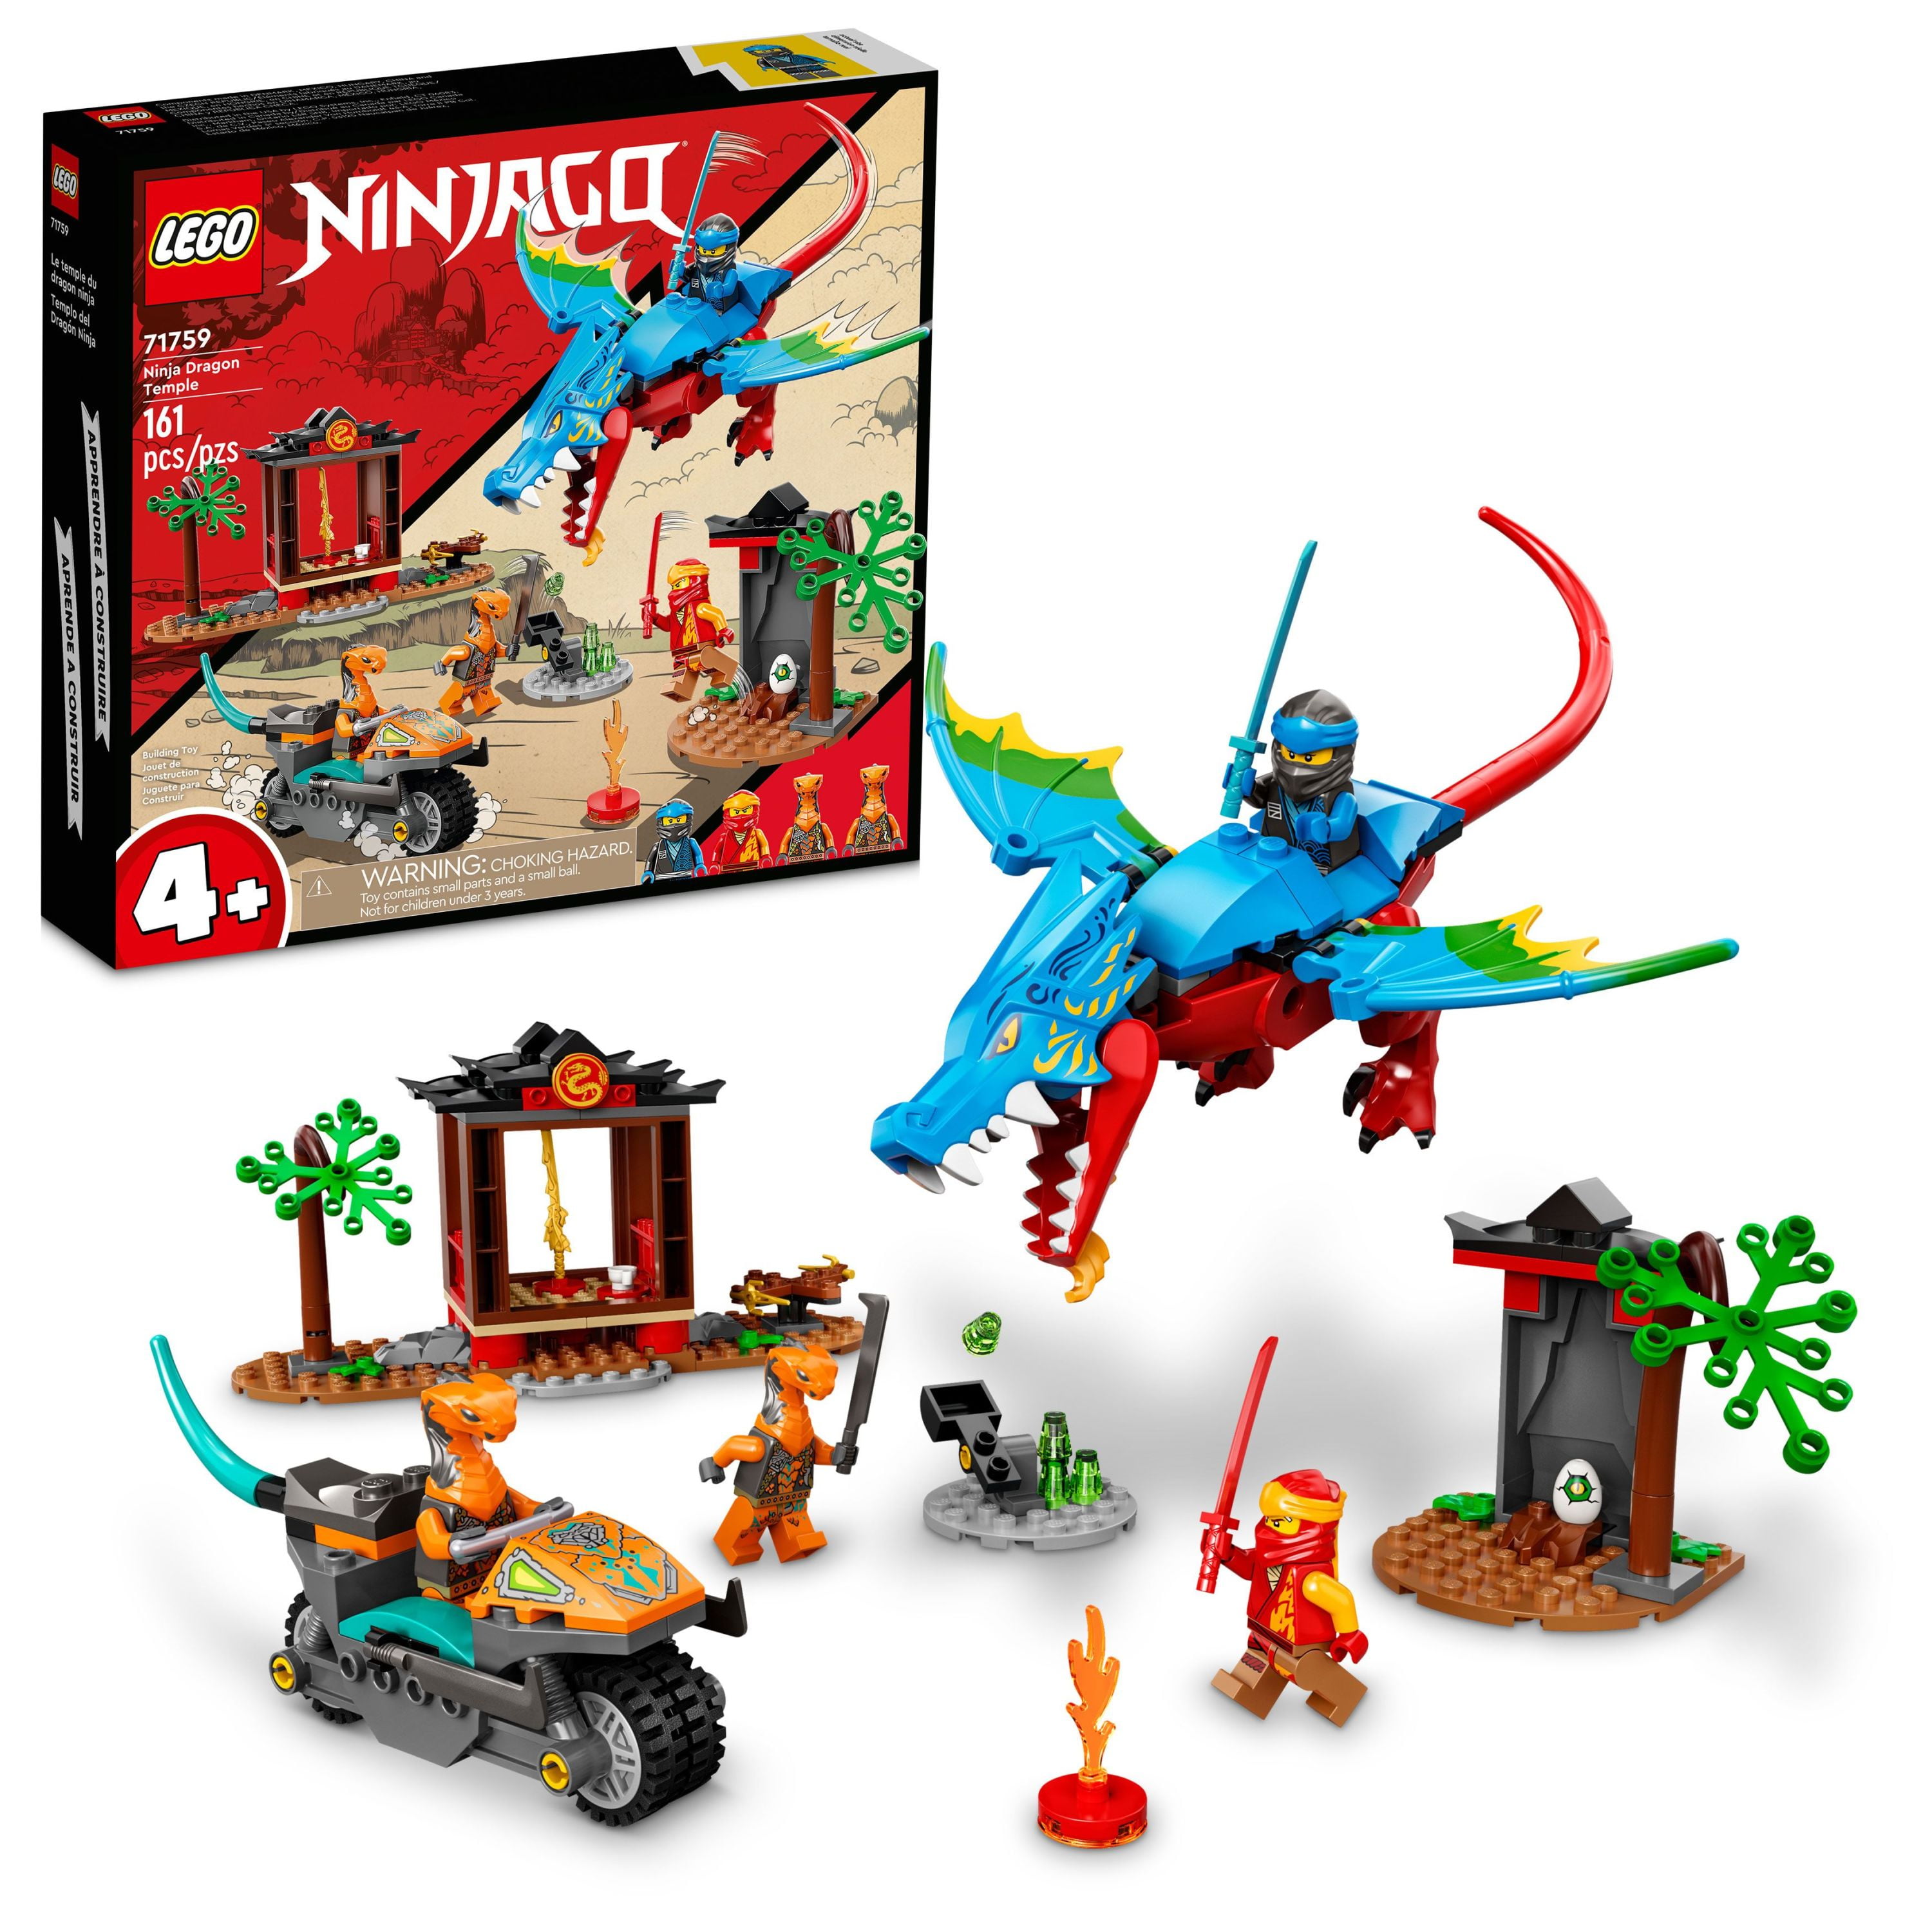 LEGO NINJAGO Ninja Dragon Temple Set 71759 with Toy Motorcycle, Kai, Nya and Snake Warrior Minifigures, Gift for Kids 4 Plus Years Old